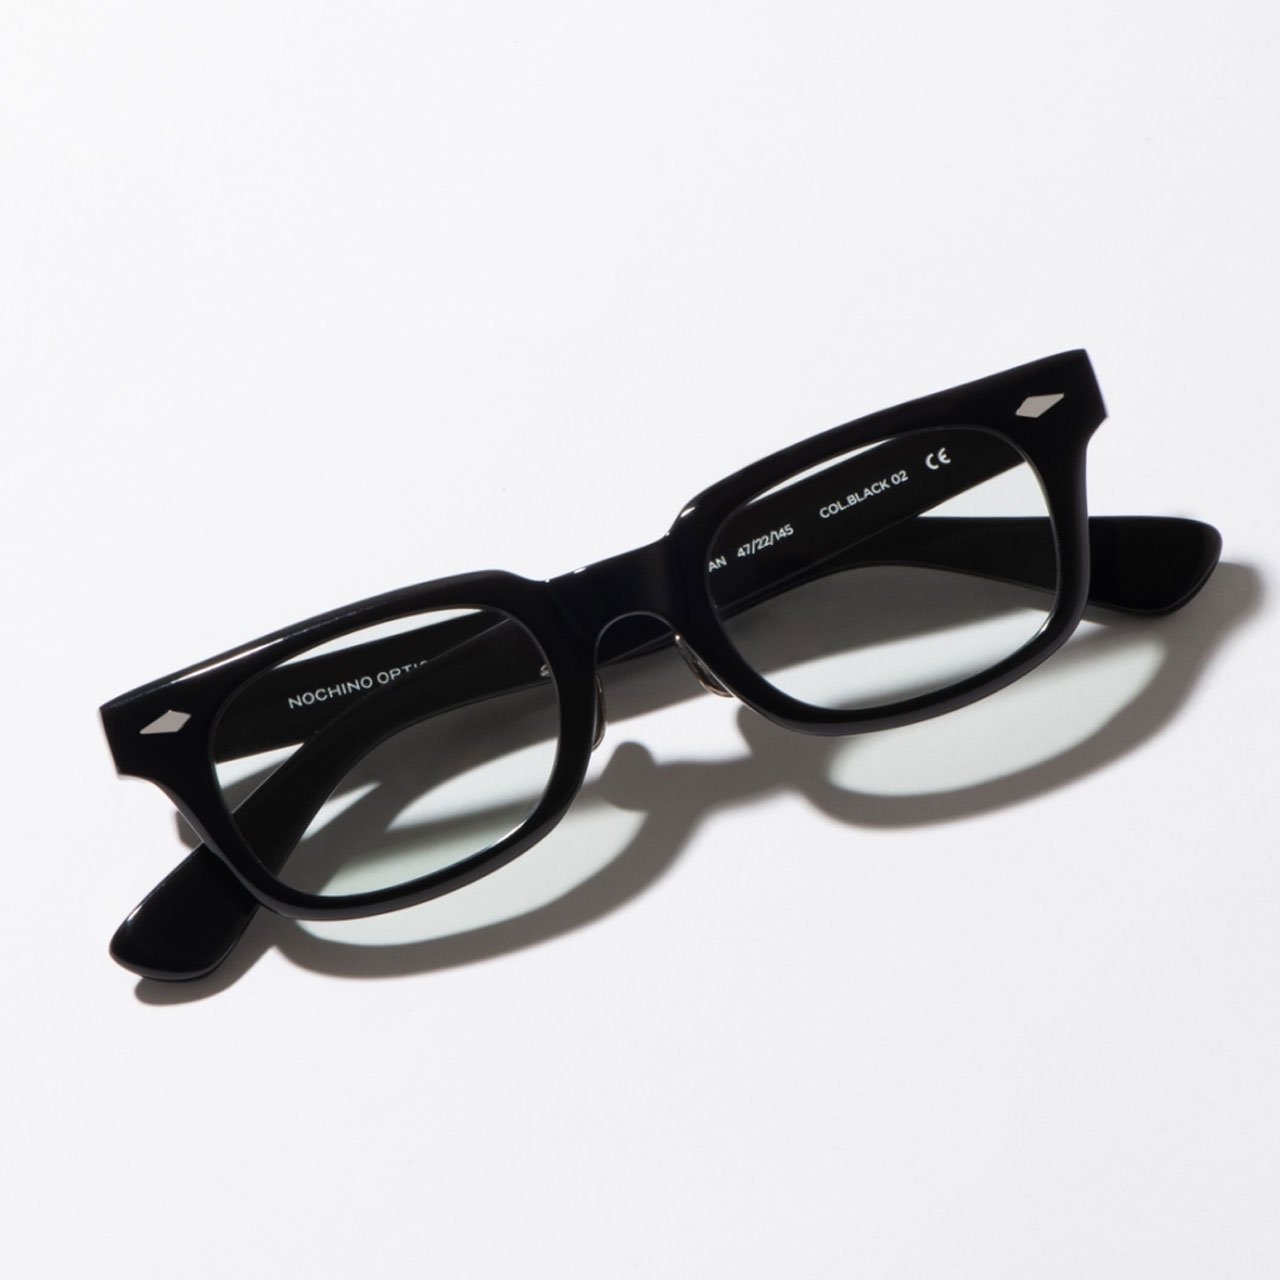 NOCHINO OPTICAL (ノチノオプティカル)24SS/春夏 
新型 ONDA オンダ
眼鏡 サングラス